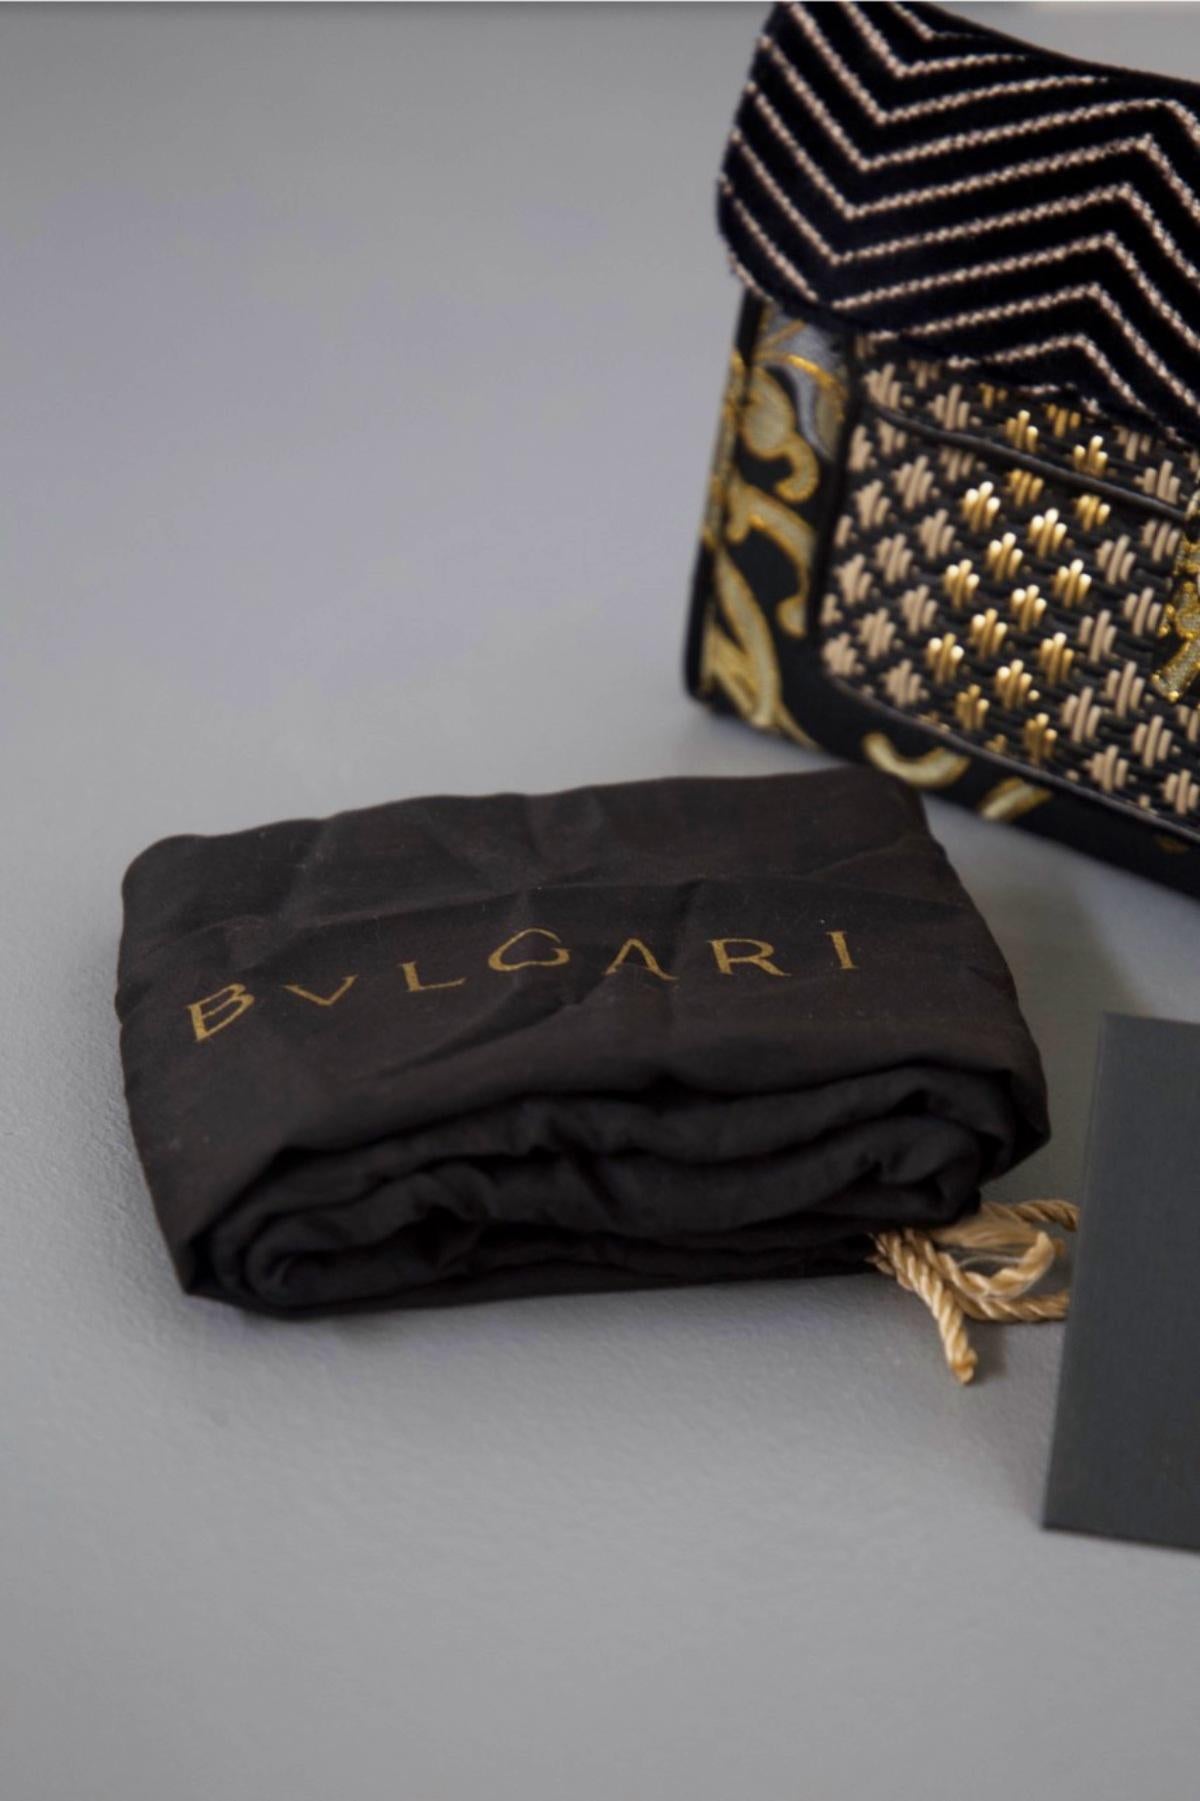 Bulgari Damen-Clutch Bag mit goldenen floralen Details 8